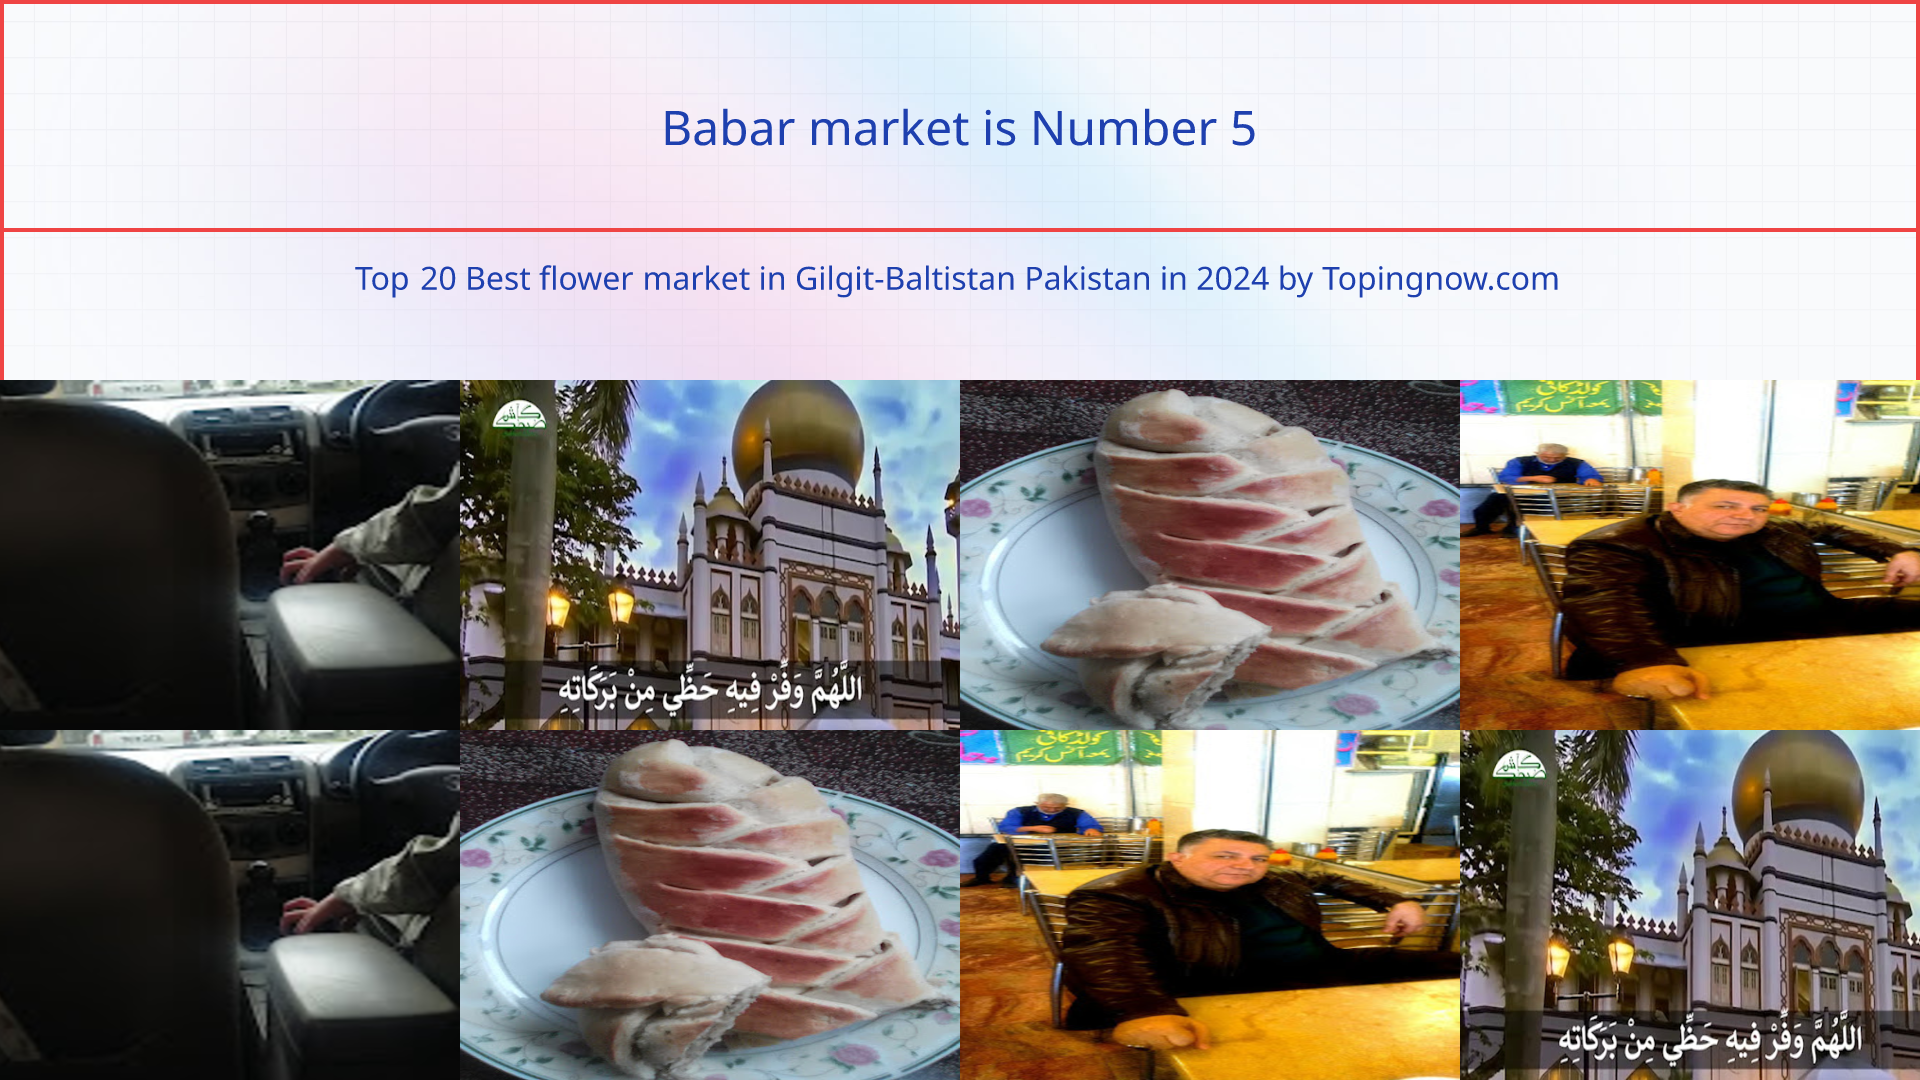 Babar market: Top 20 Best flower market in Gilgit-Baltistan Pakistan in 2024